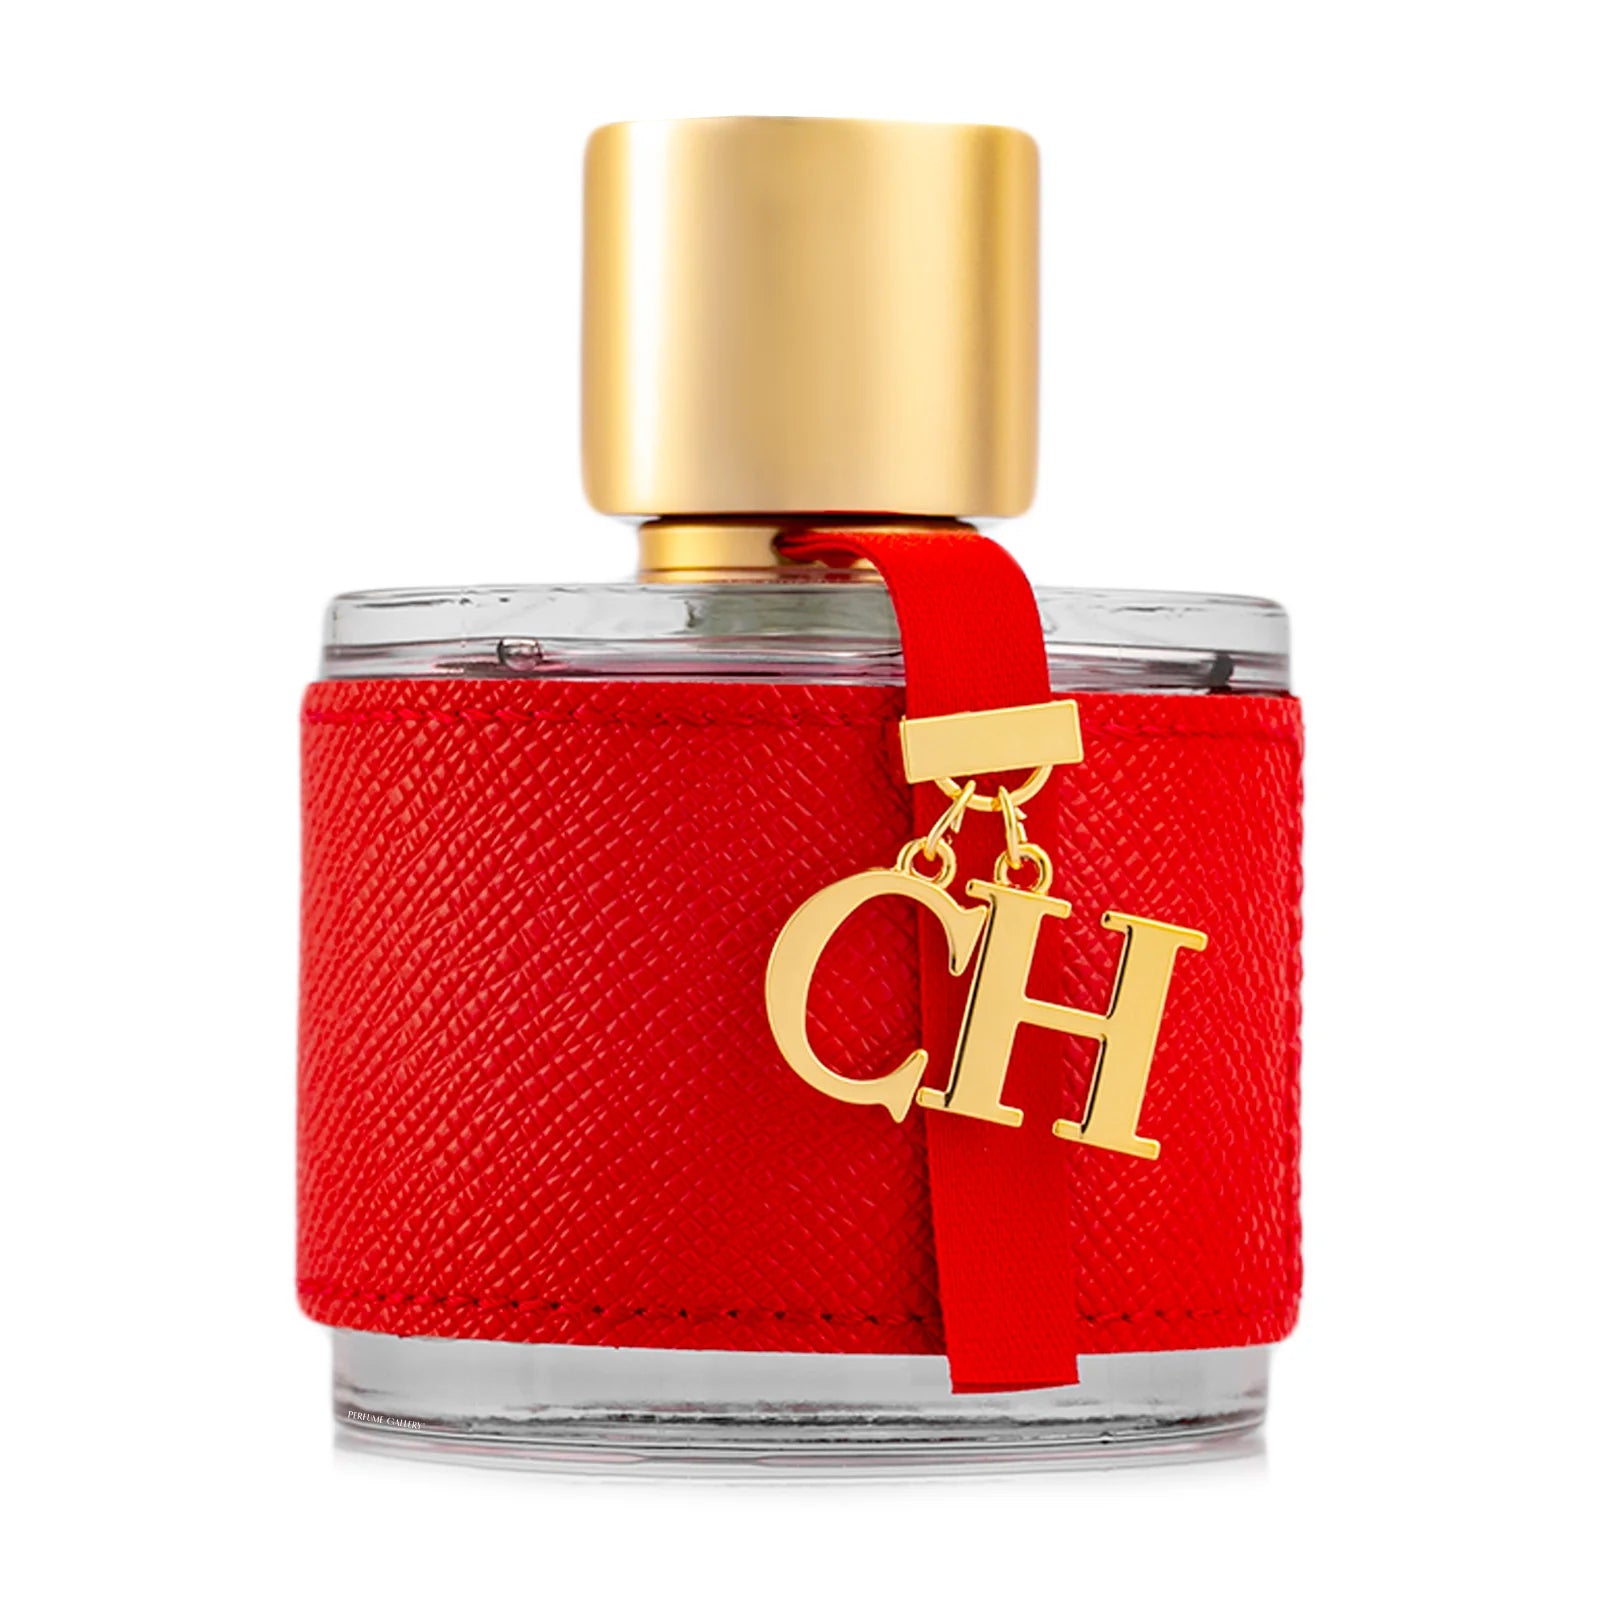 CHCH By Carolina Herrera For Women 3.4 oz EDT Spray